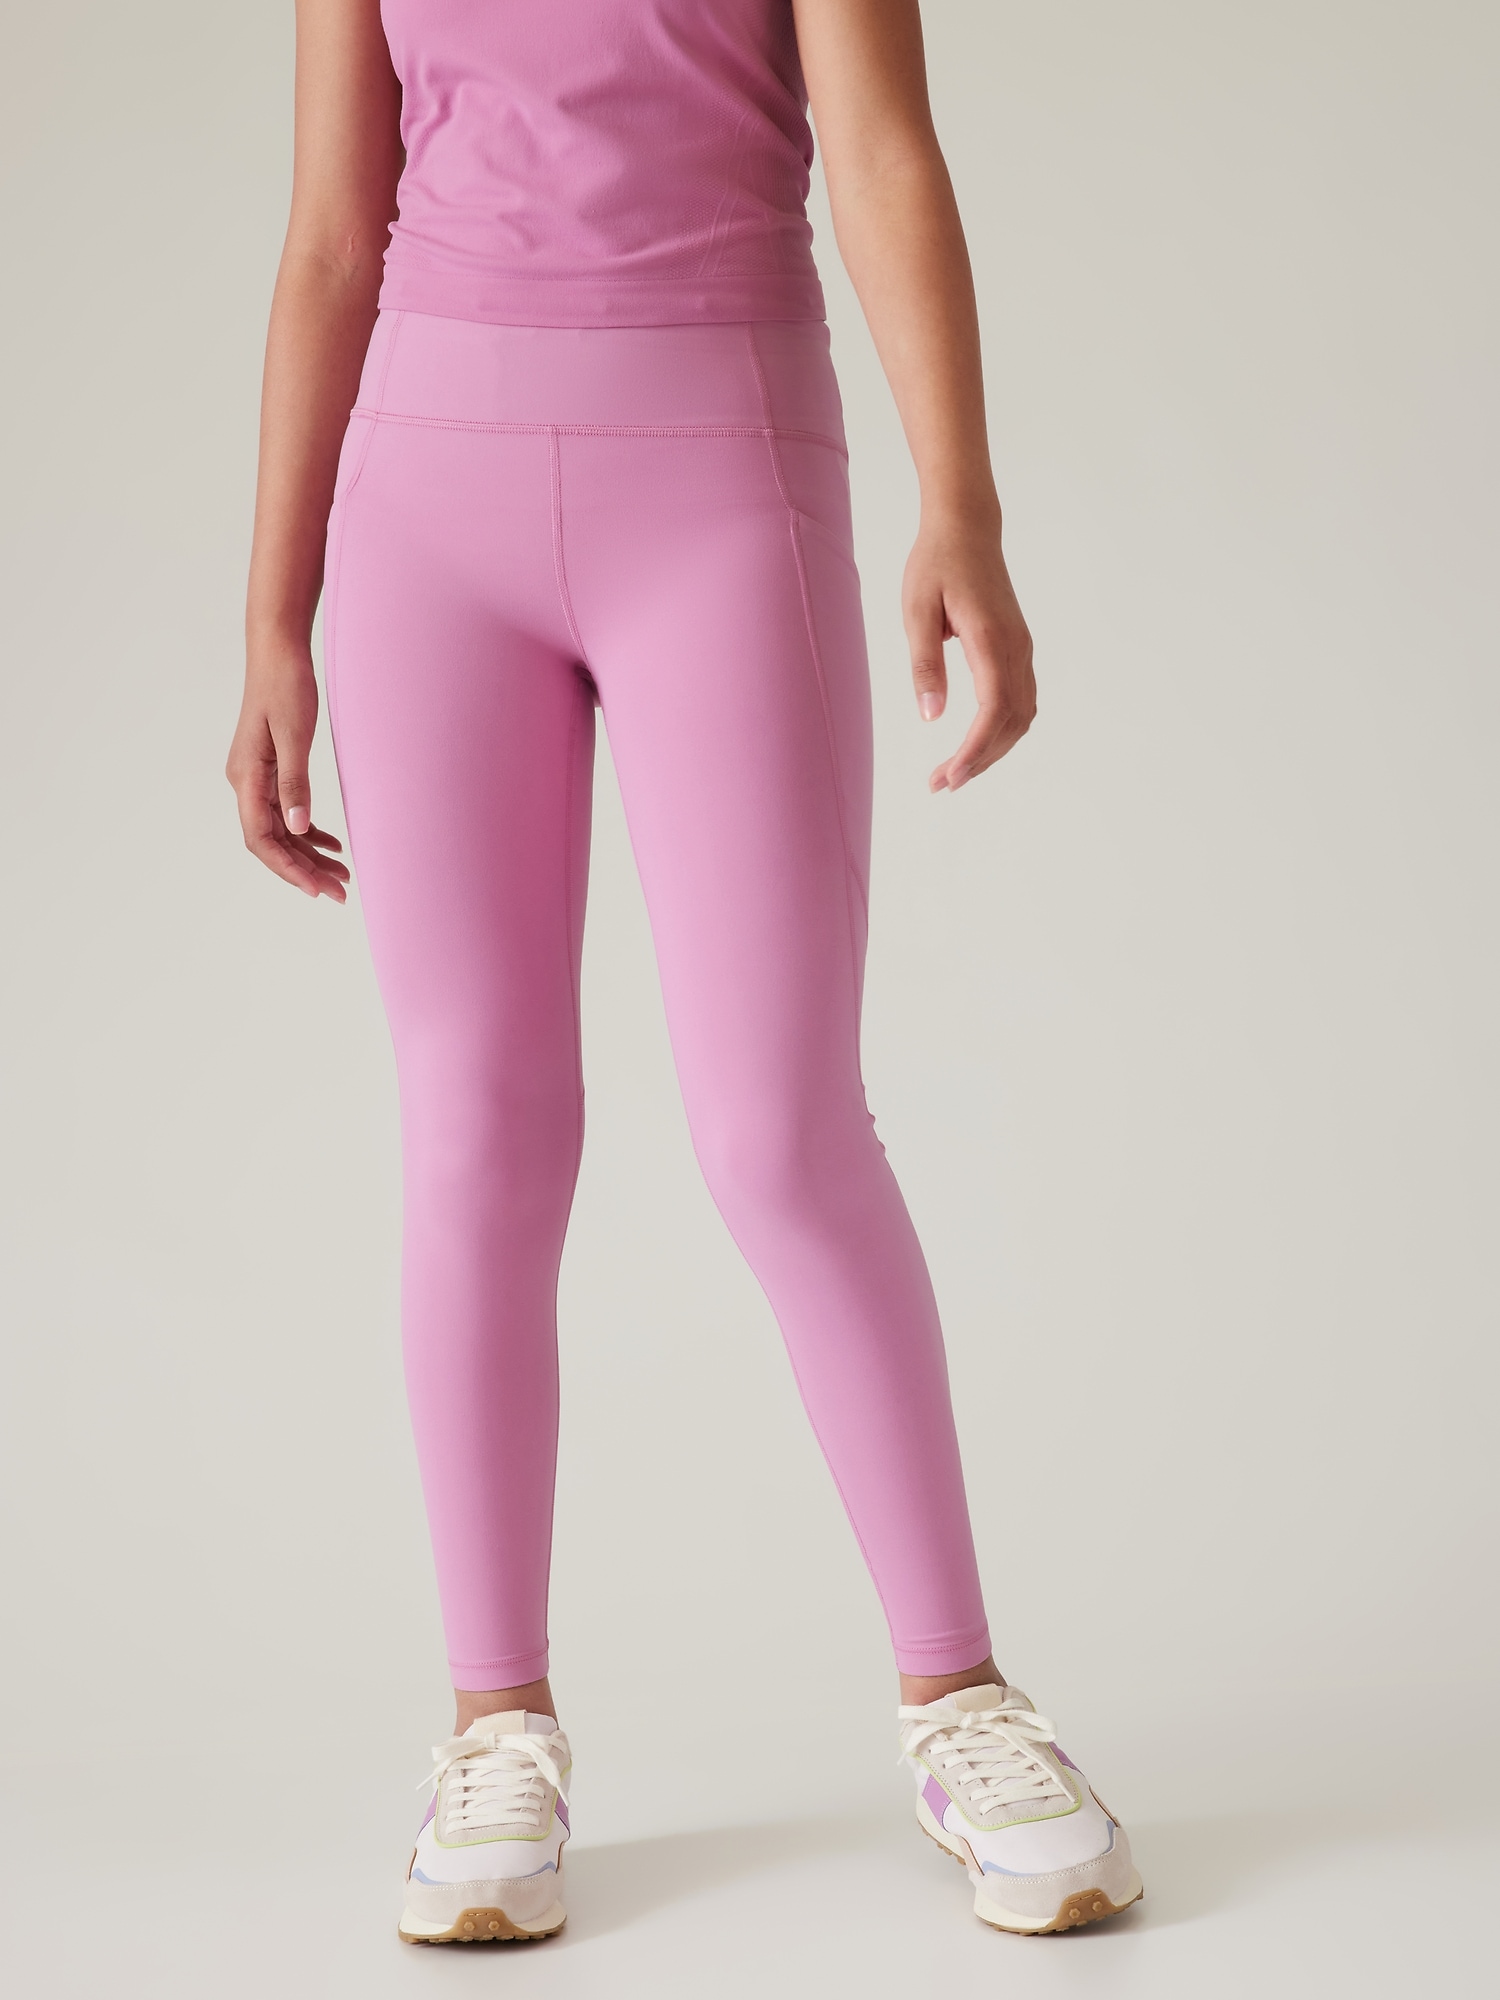 MAHA YOGI Luna Leggings Yoga Leggings Athleta Leggings High Waist Yoga Pants  Sport Leggings - Pink; Size: Small at  Women's Clothing store